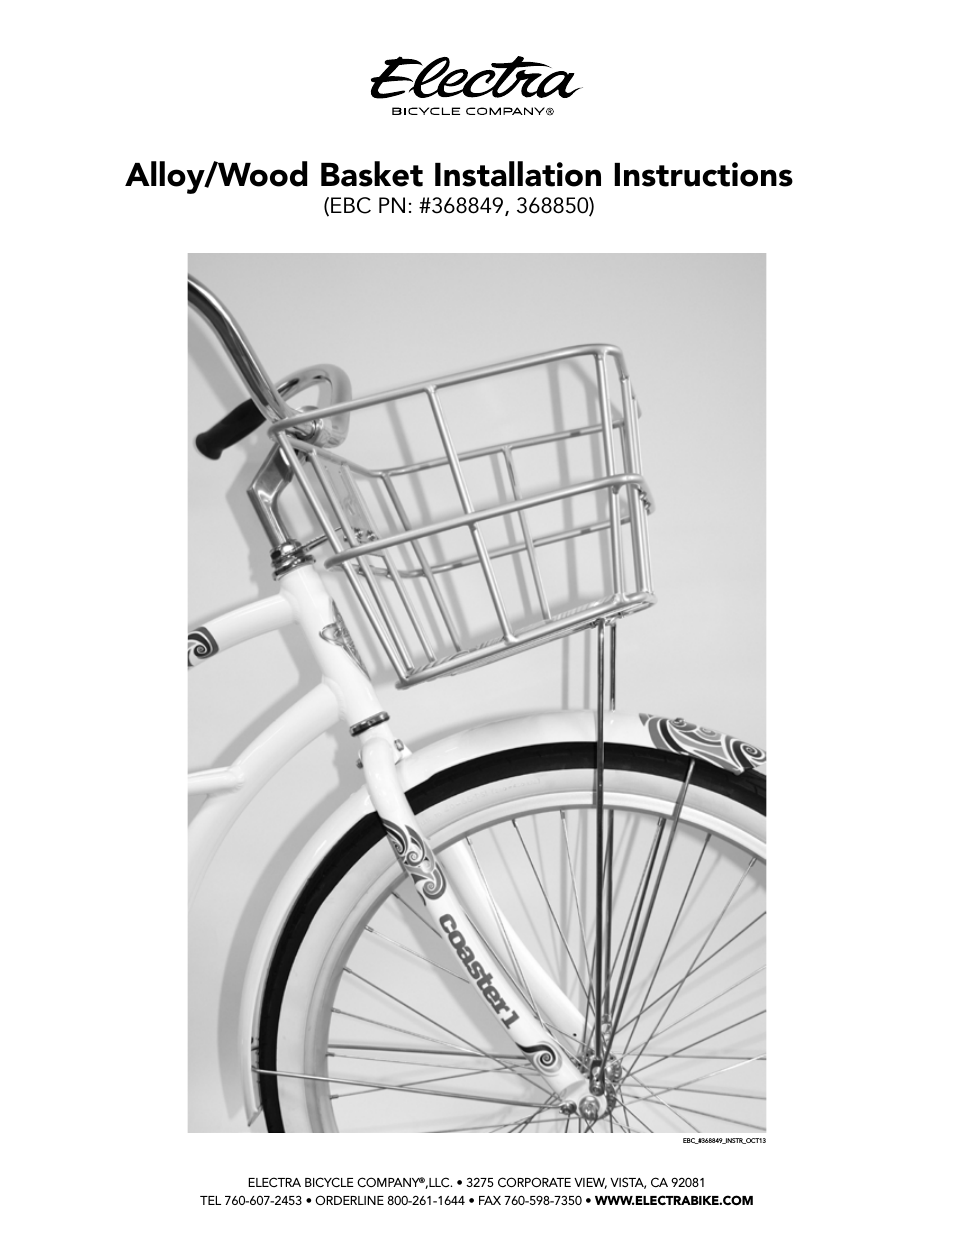 Alloy/Wood Basket (368849, 368850)